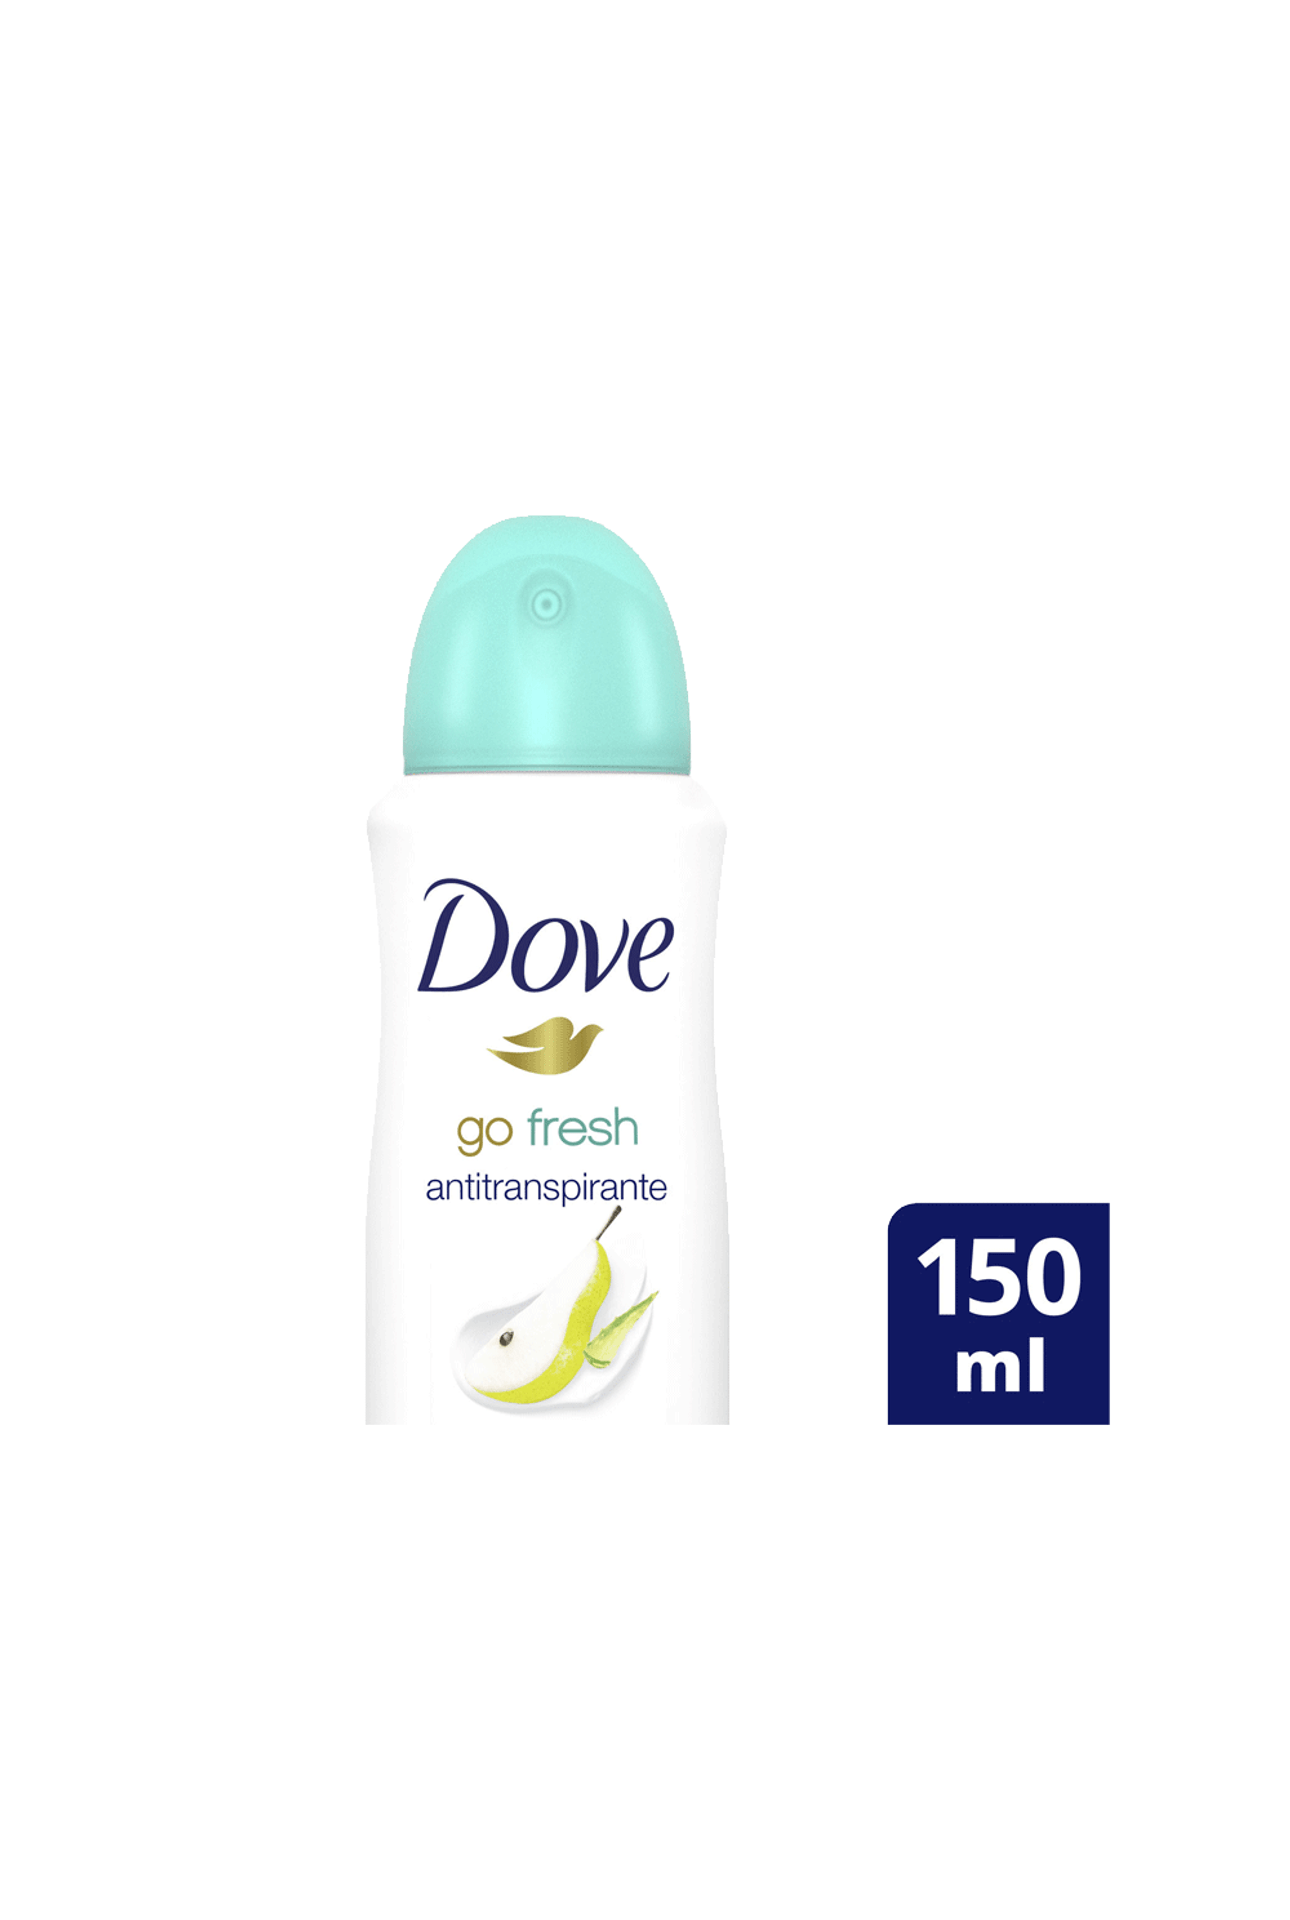 Dove-Antitranspirante-Dove-Go-Fresh-Pera-x-150ml-7791293048505_img1